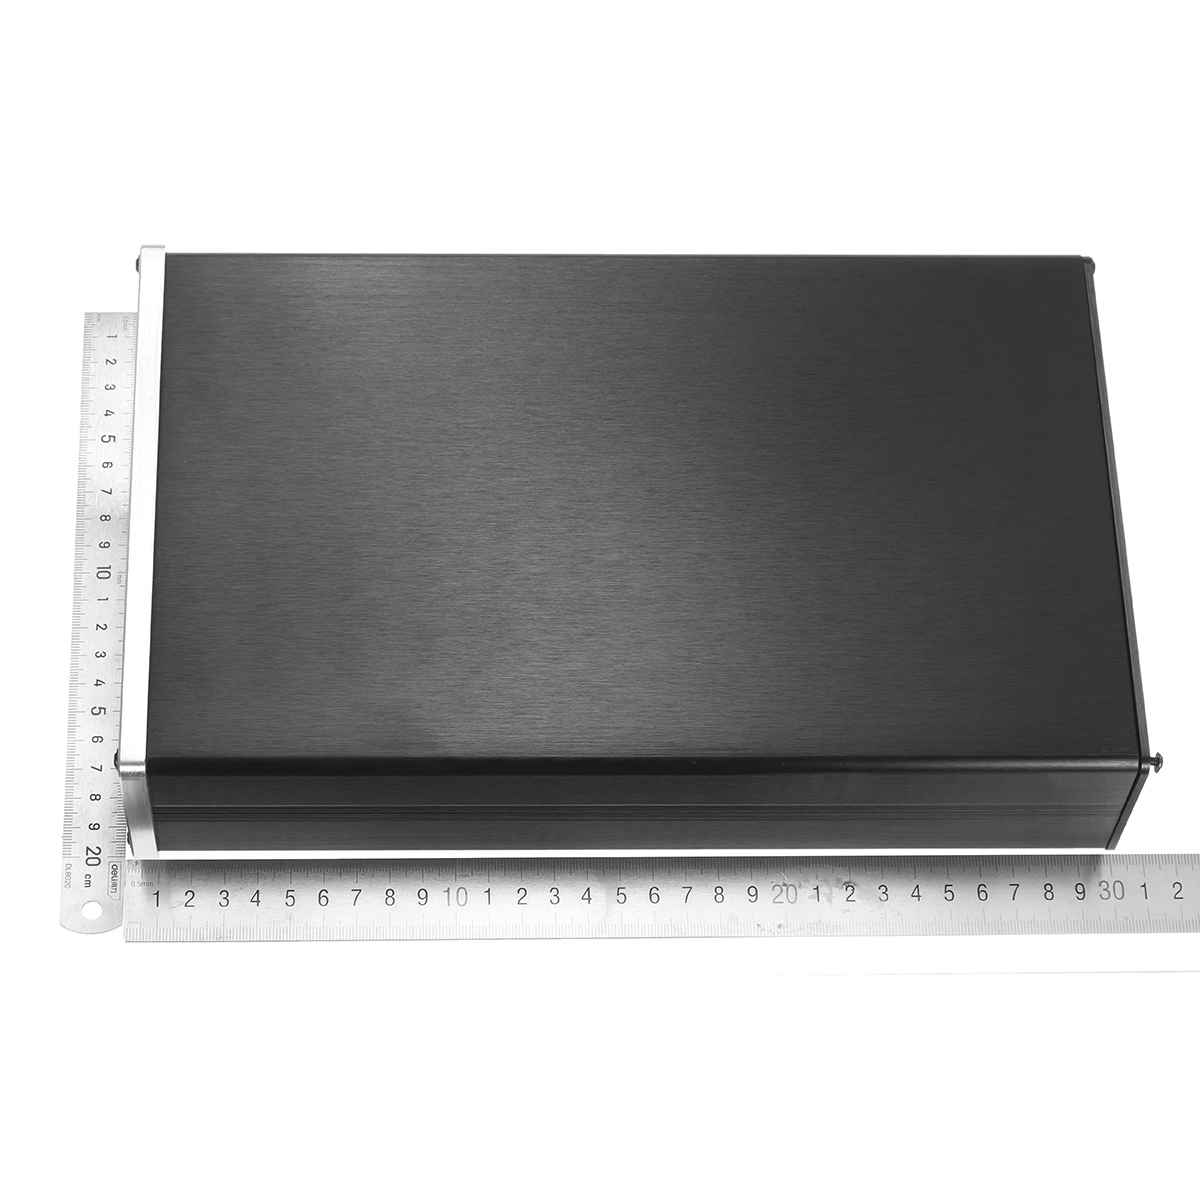 Metal-Shell-Housing-for-PCM1794AK4113-Luxury-Decoder-Board-DAC-Supports-Optical-Fiber-Coaxial-USB-1838962-5